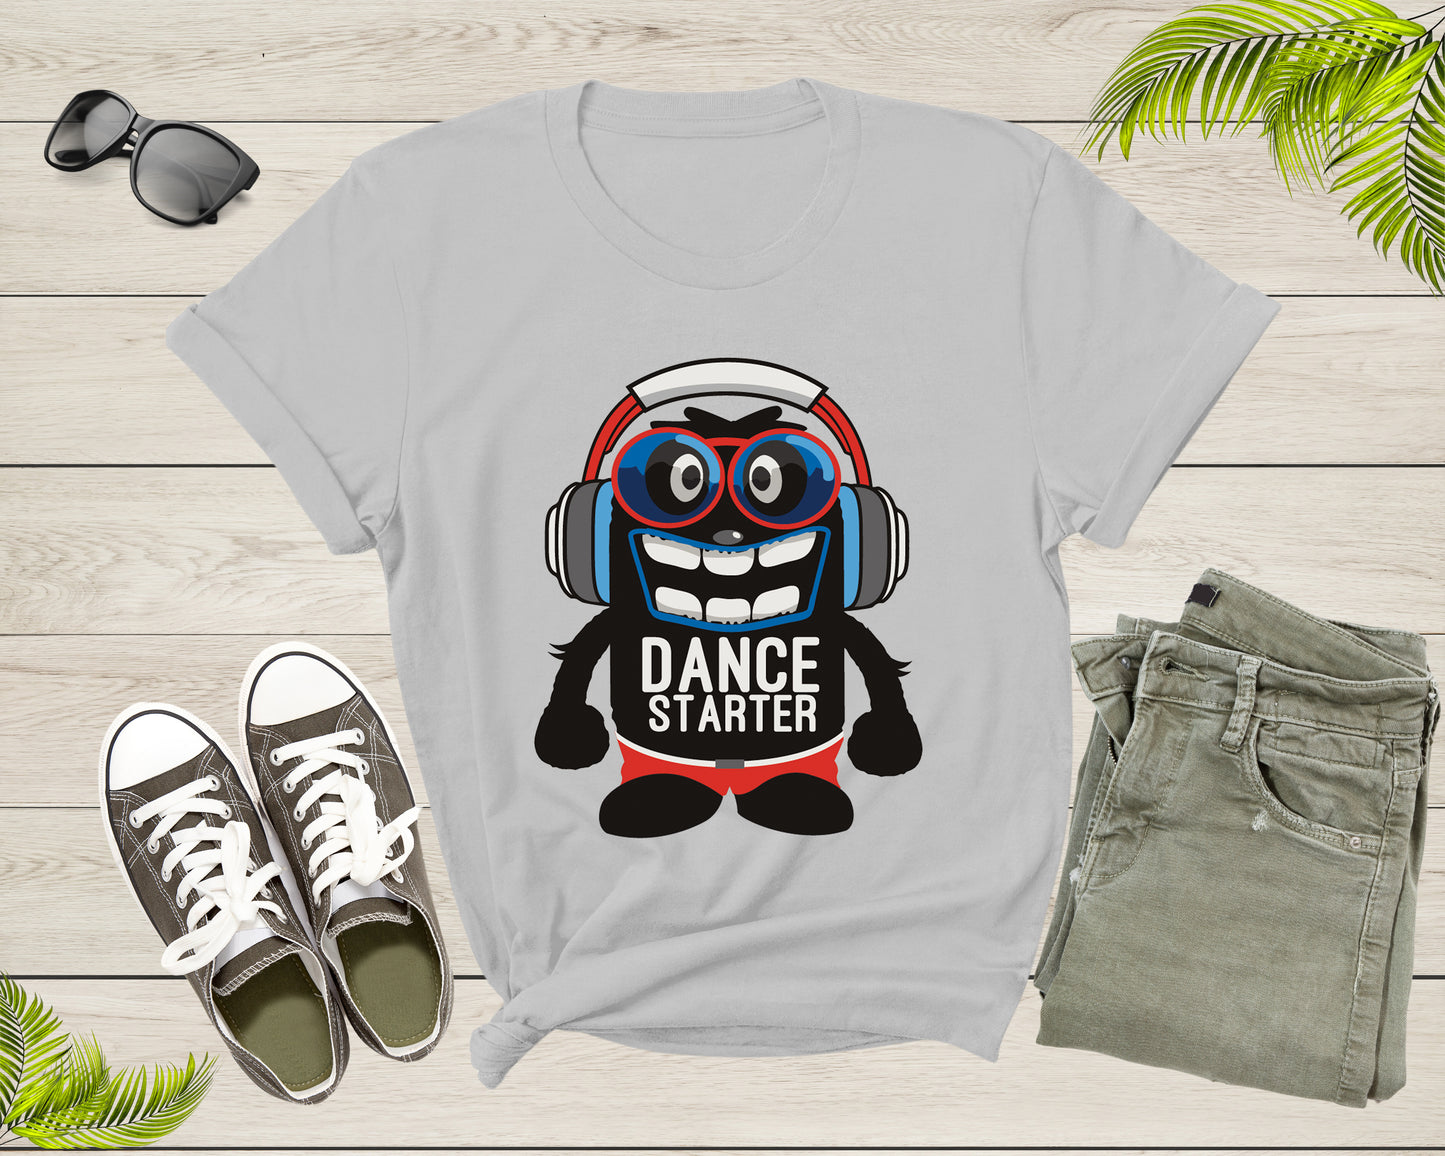 Dance Starter Funny Smiling Mascot with Glasses and Headset T-Shirt Dancer Dance Lover Gift Graphic T Shirt for Men Women Kids Boys Girls